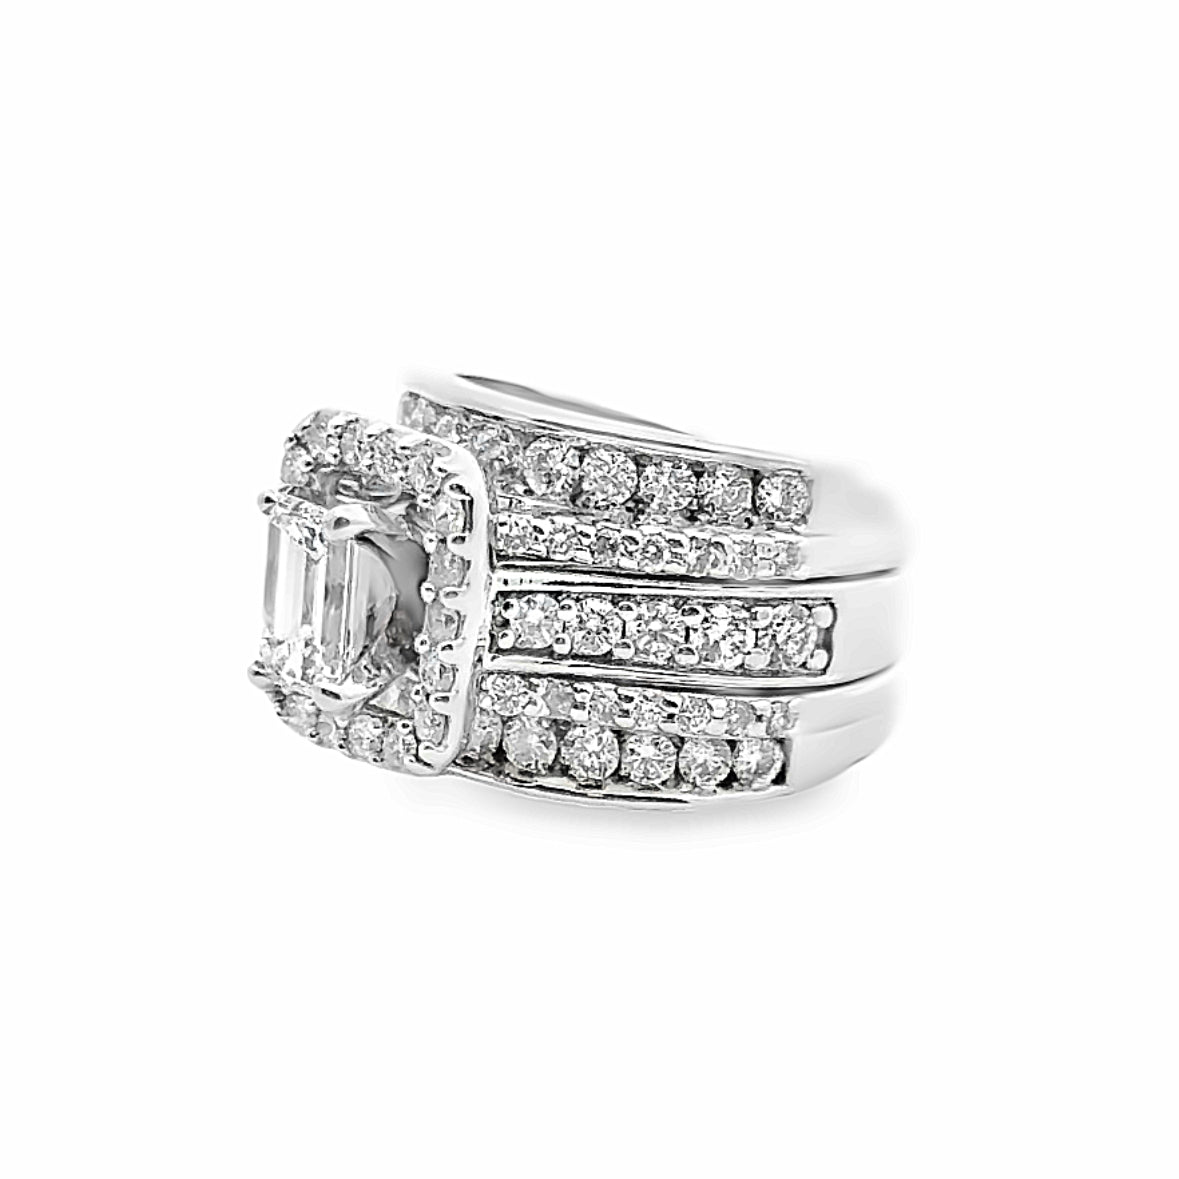 Luxurious 14K White Gold Diamond Halo Engagement Ring